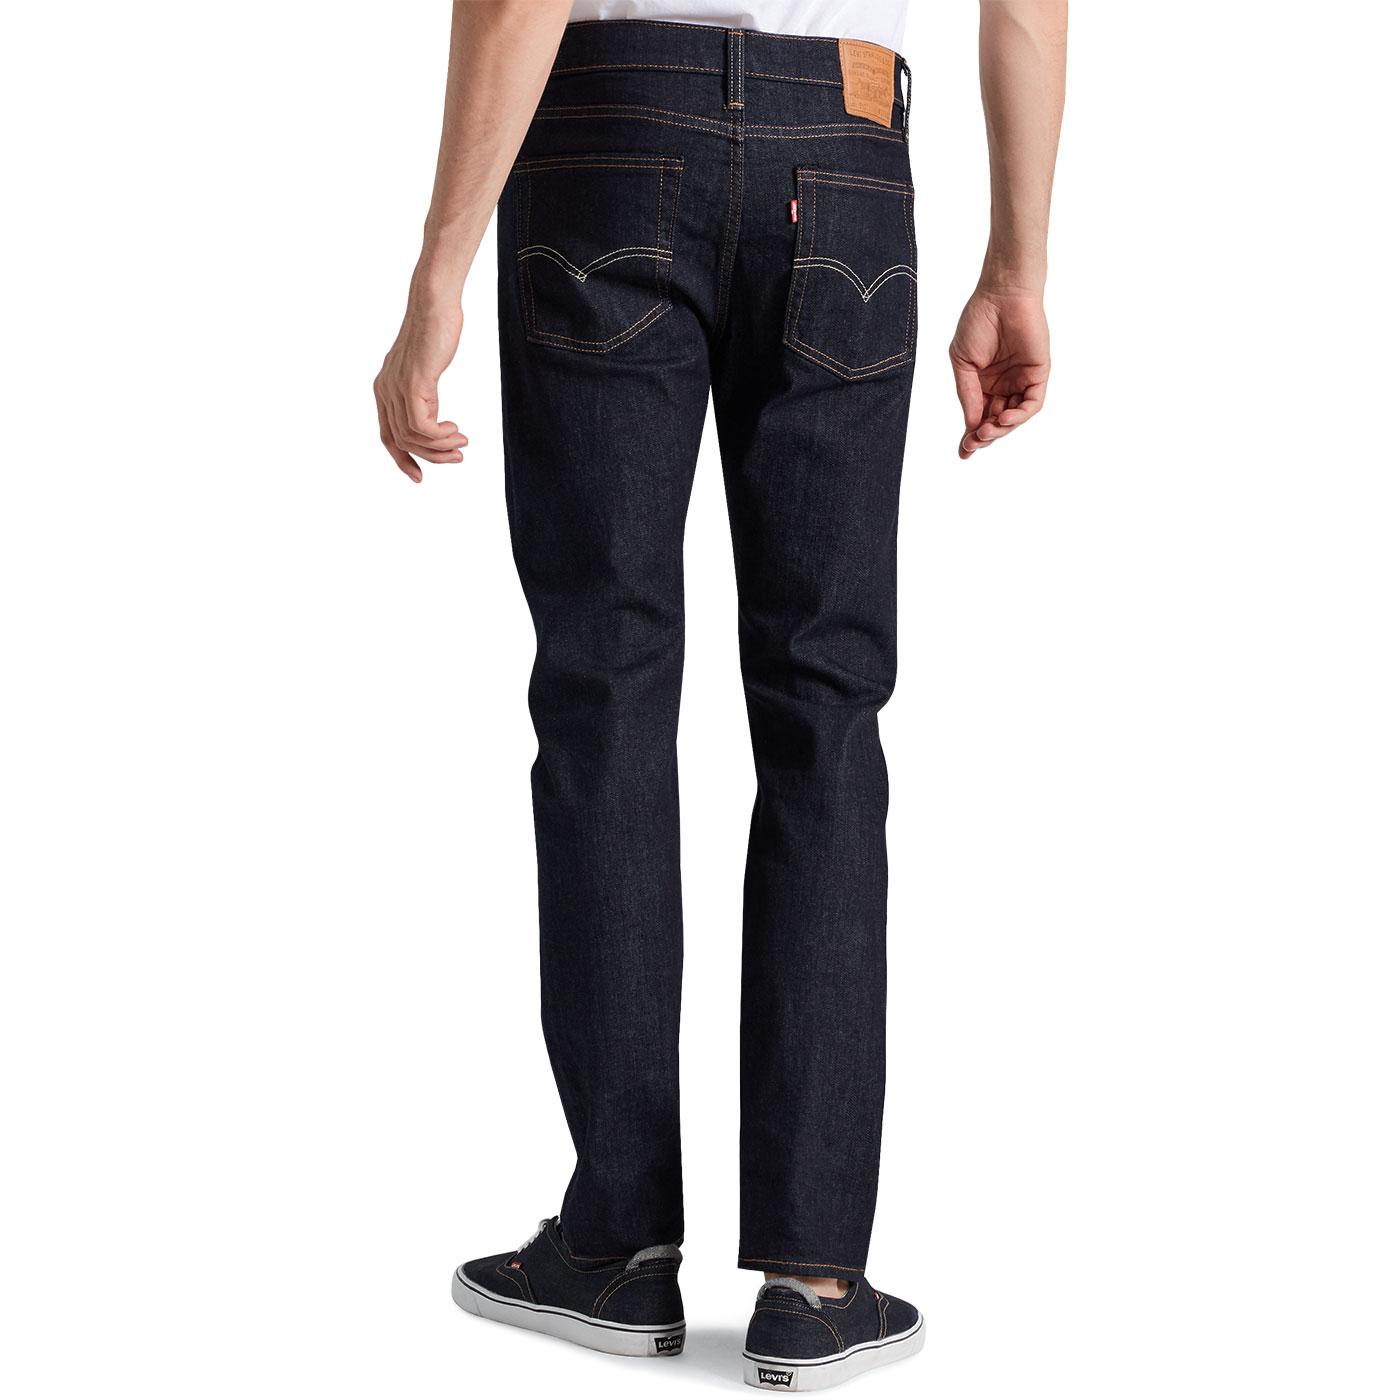 LEVI'S 510 Men's Retro Skinny Fit Jeans in Cleaner Adv.